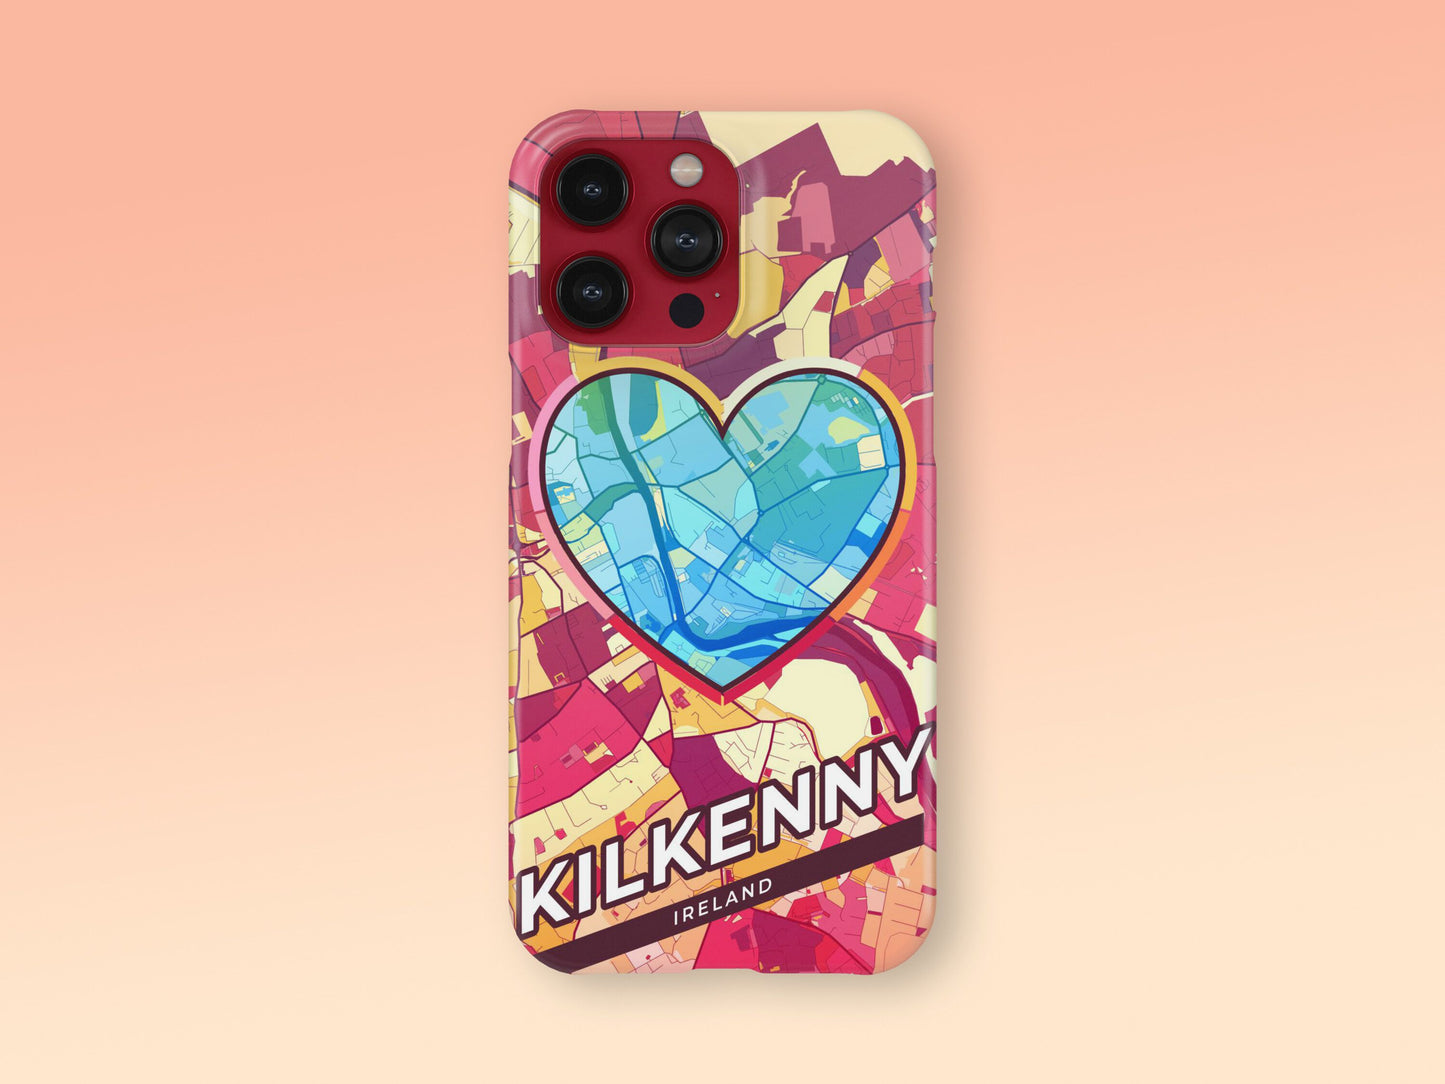 Kilkenny Ireland slim phone case with colorful icon. Birthday, wedding or housewarming gift. Couple match cases. 2